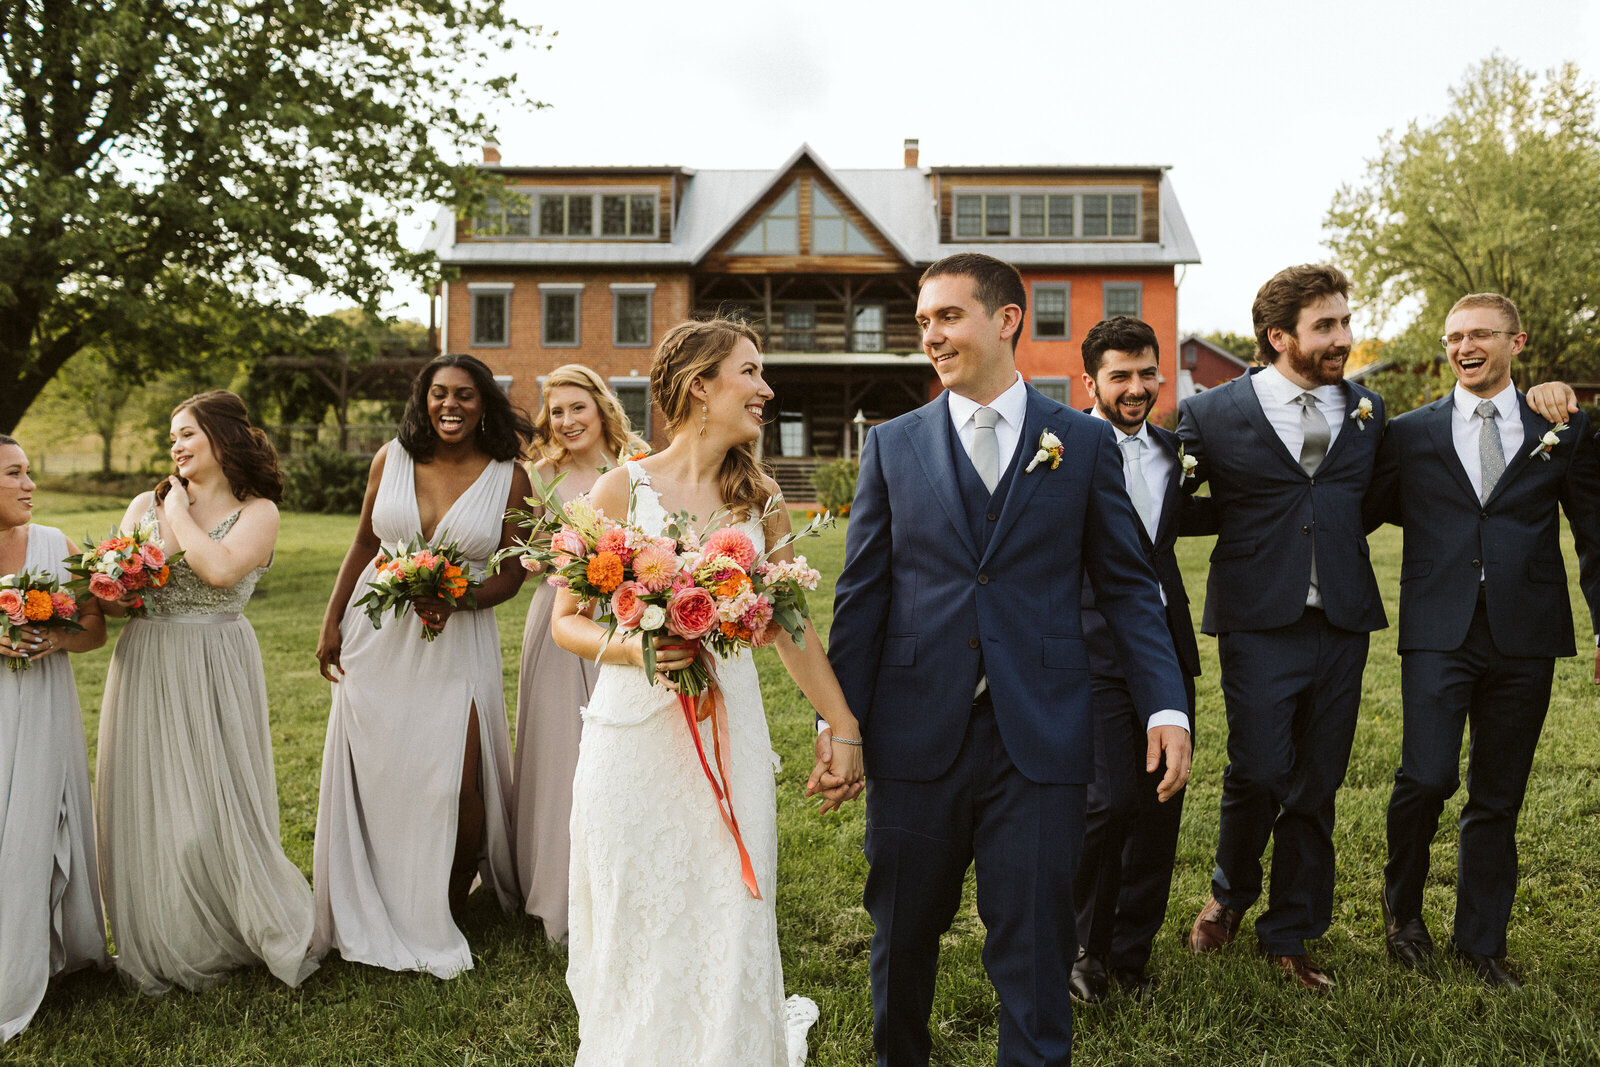 Zigbone-Farm-Retreat-Maryland-wedding-florist-Sweet-Blossoms-bridal-party-Emily-Gude-Photography2